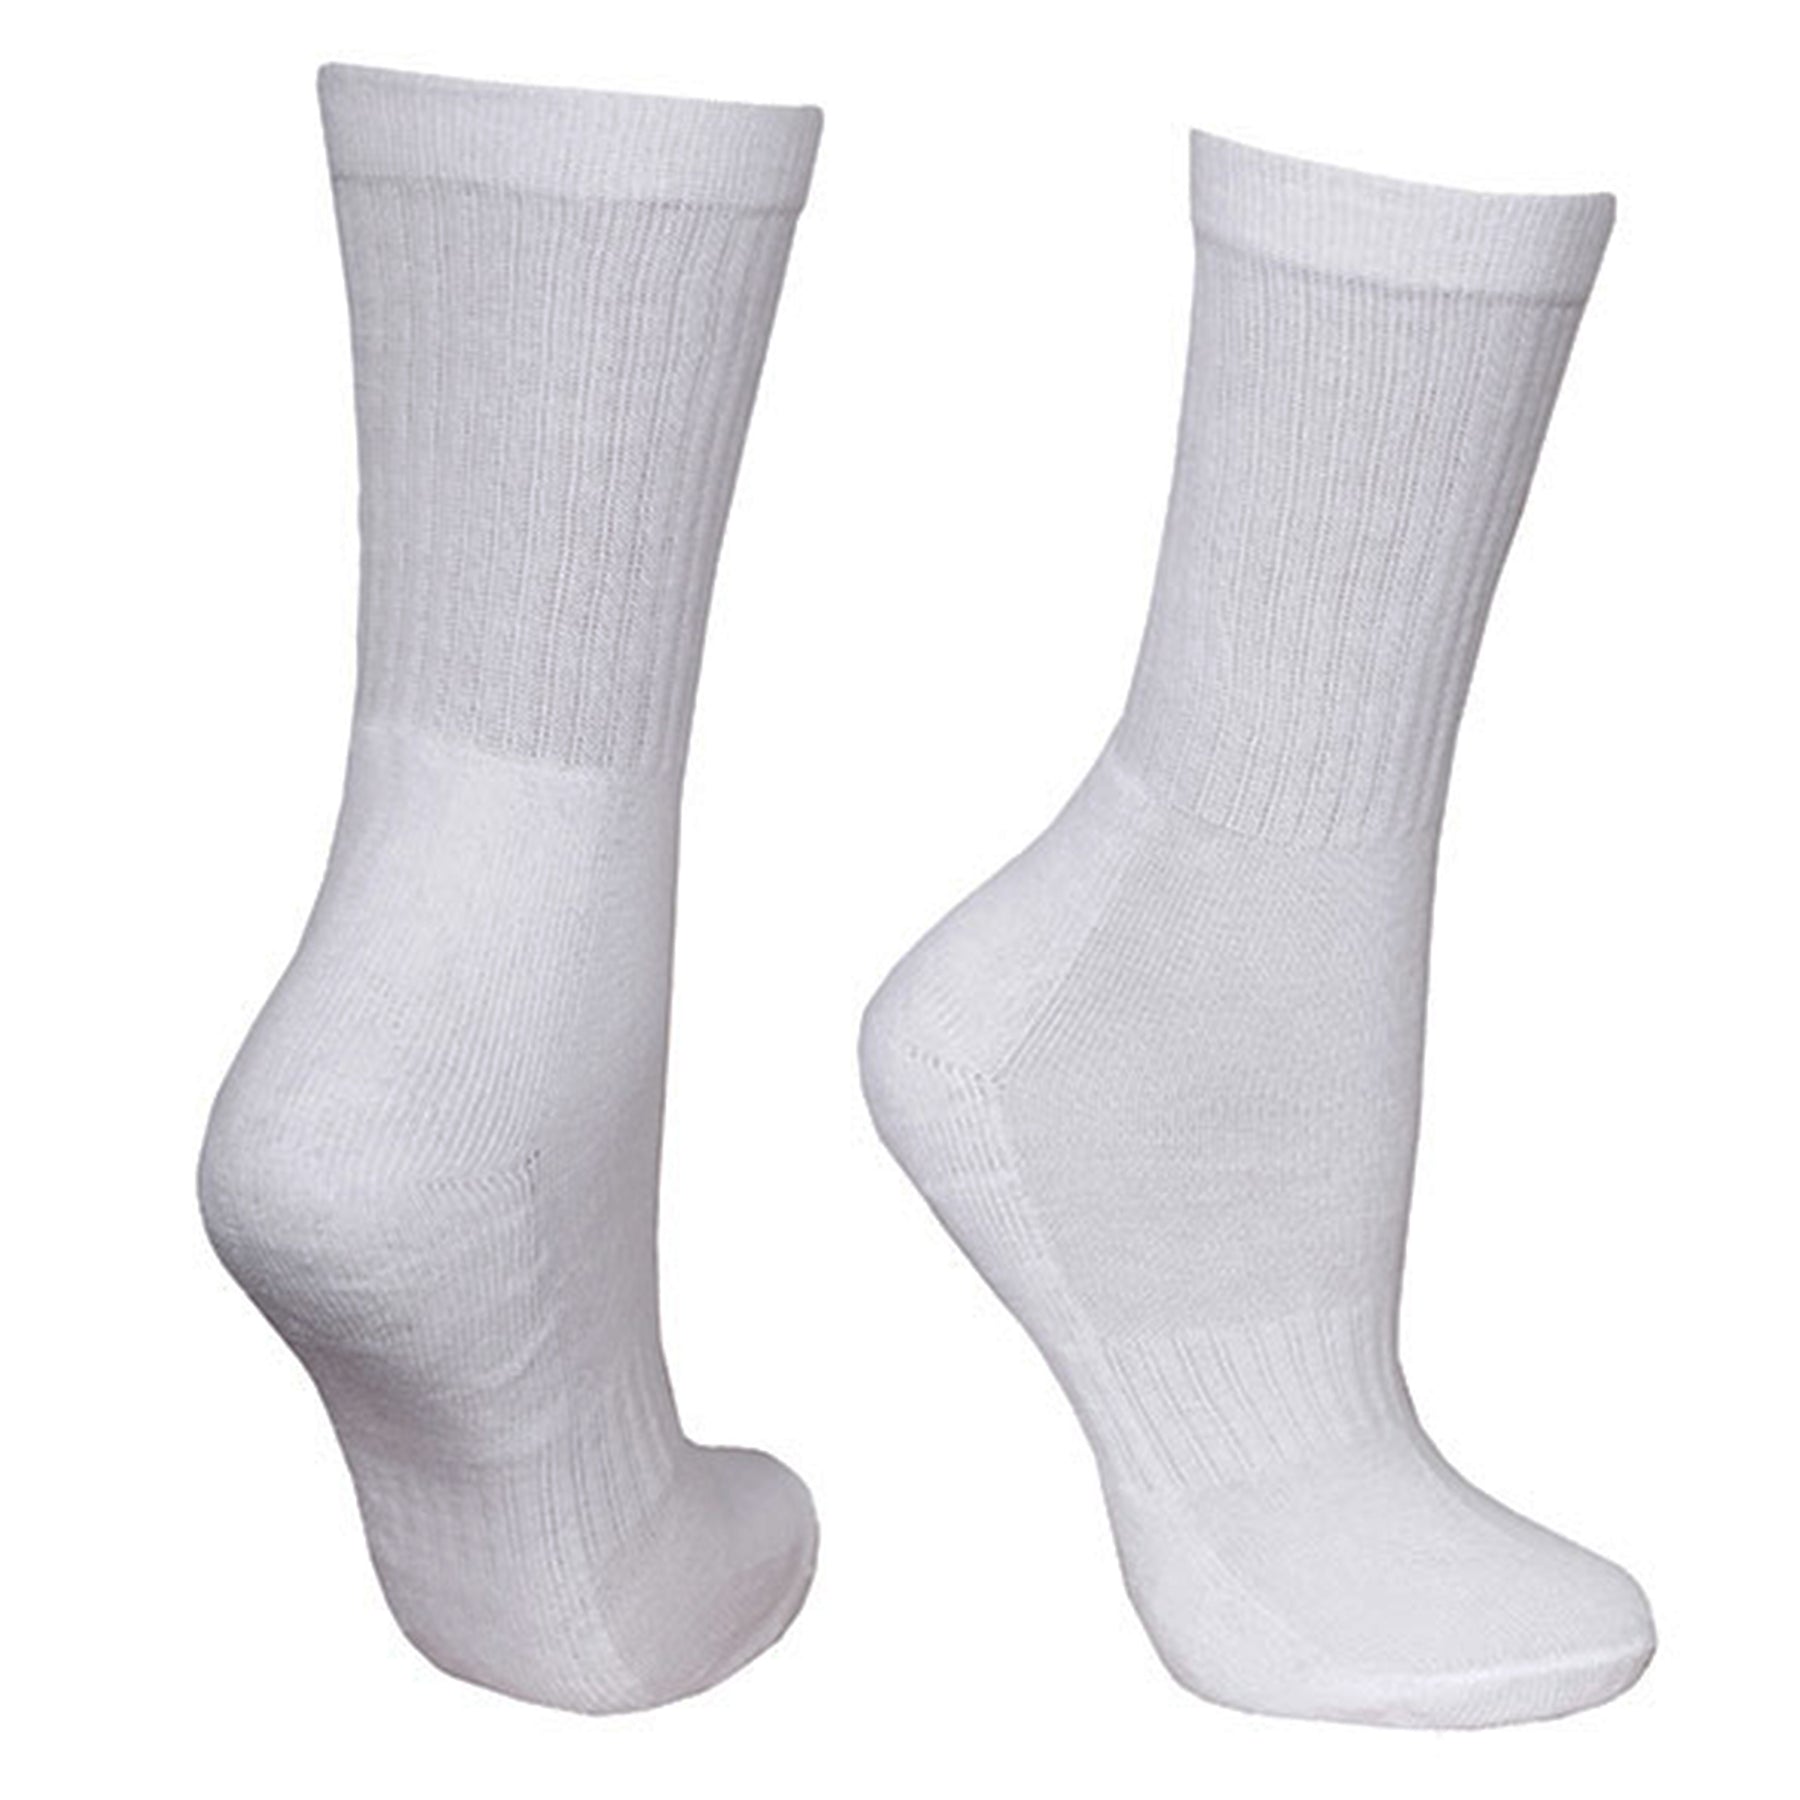 Sports Socks 2 pack: White